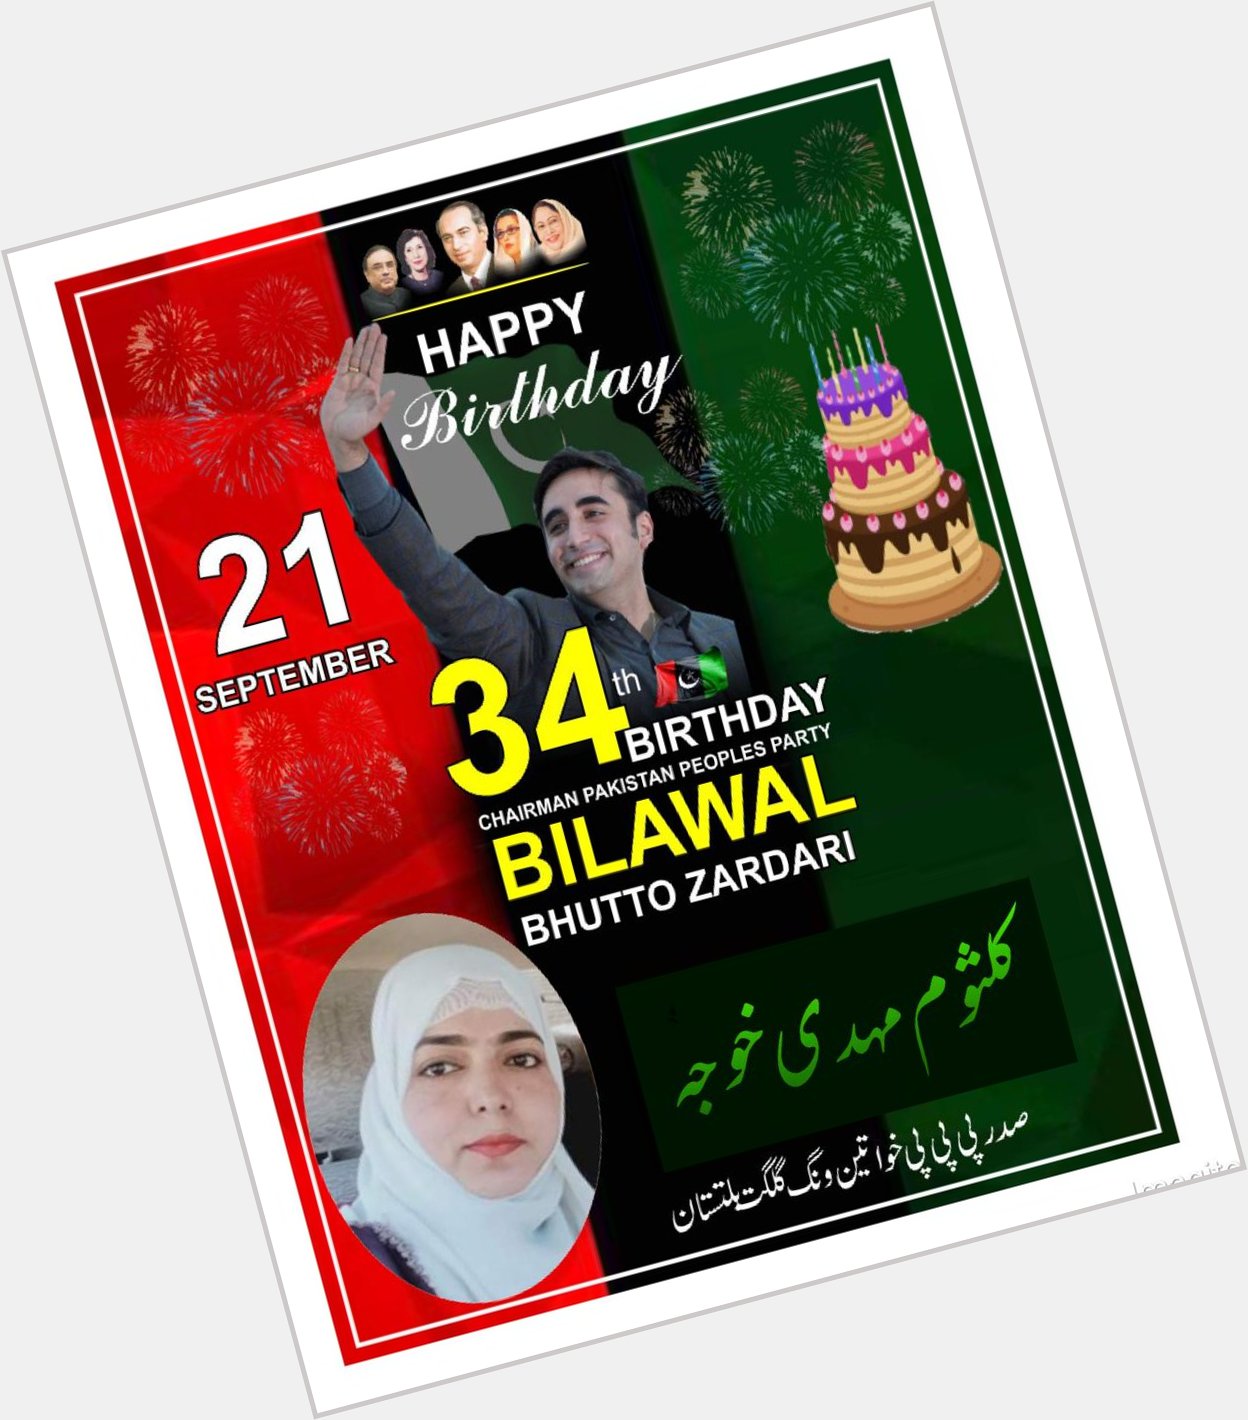 Happy birthday   May great leader 
BILAWAL Bhutto zardari 